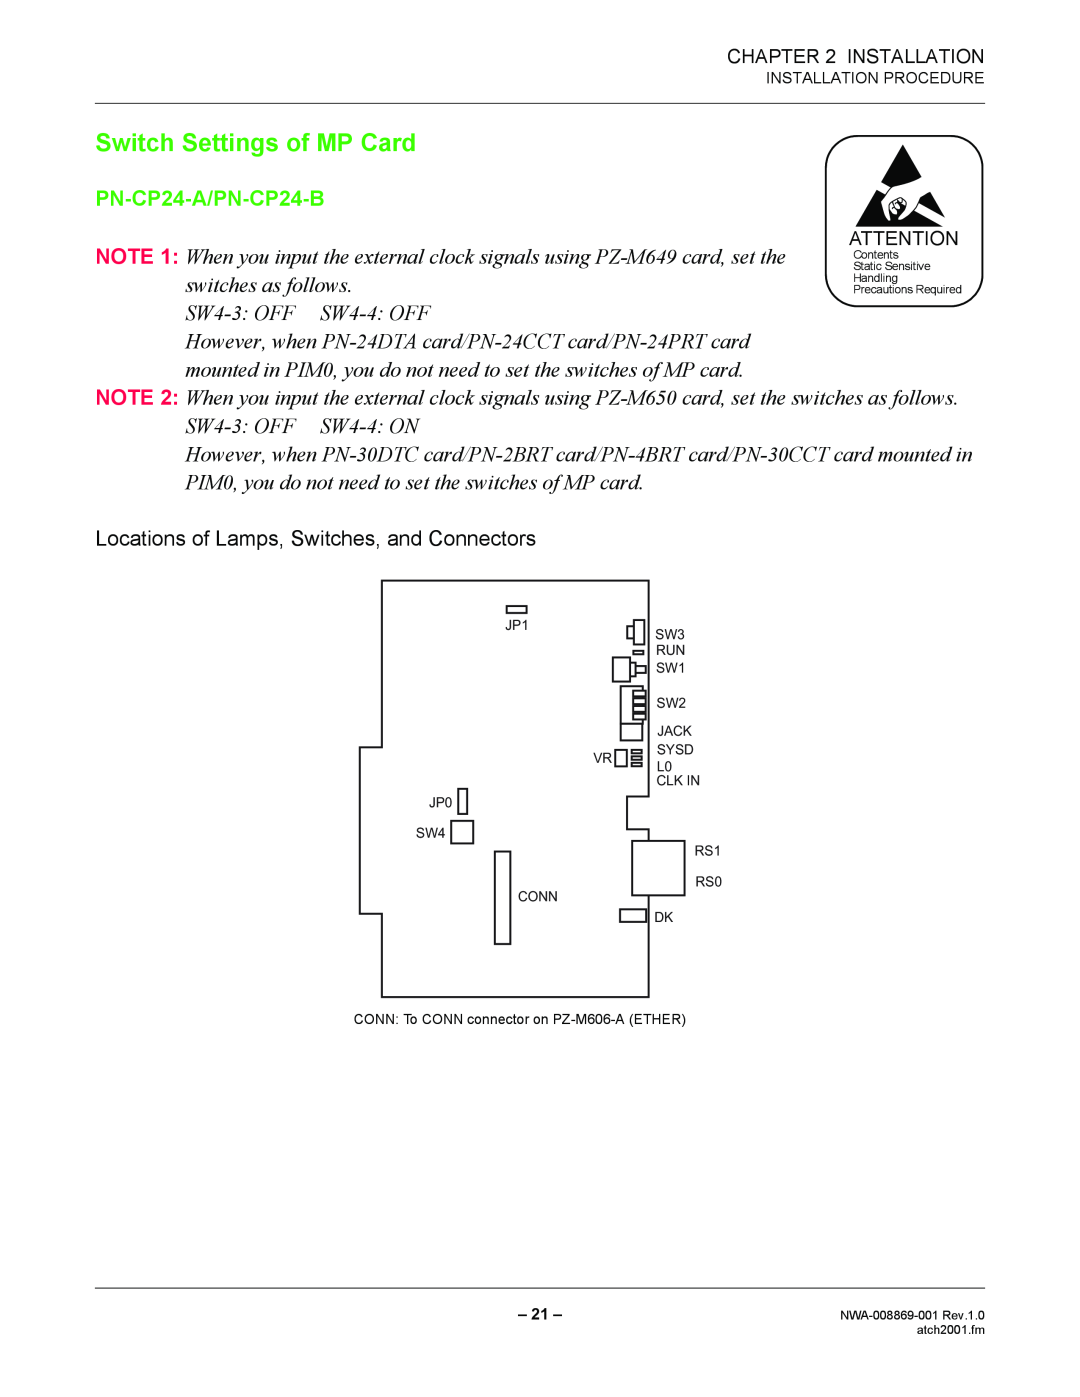 NEC NWA-008869-001 manual Switch Settings of MP Card, PN-CP24-A/PN-CP24-B 